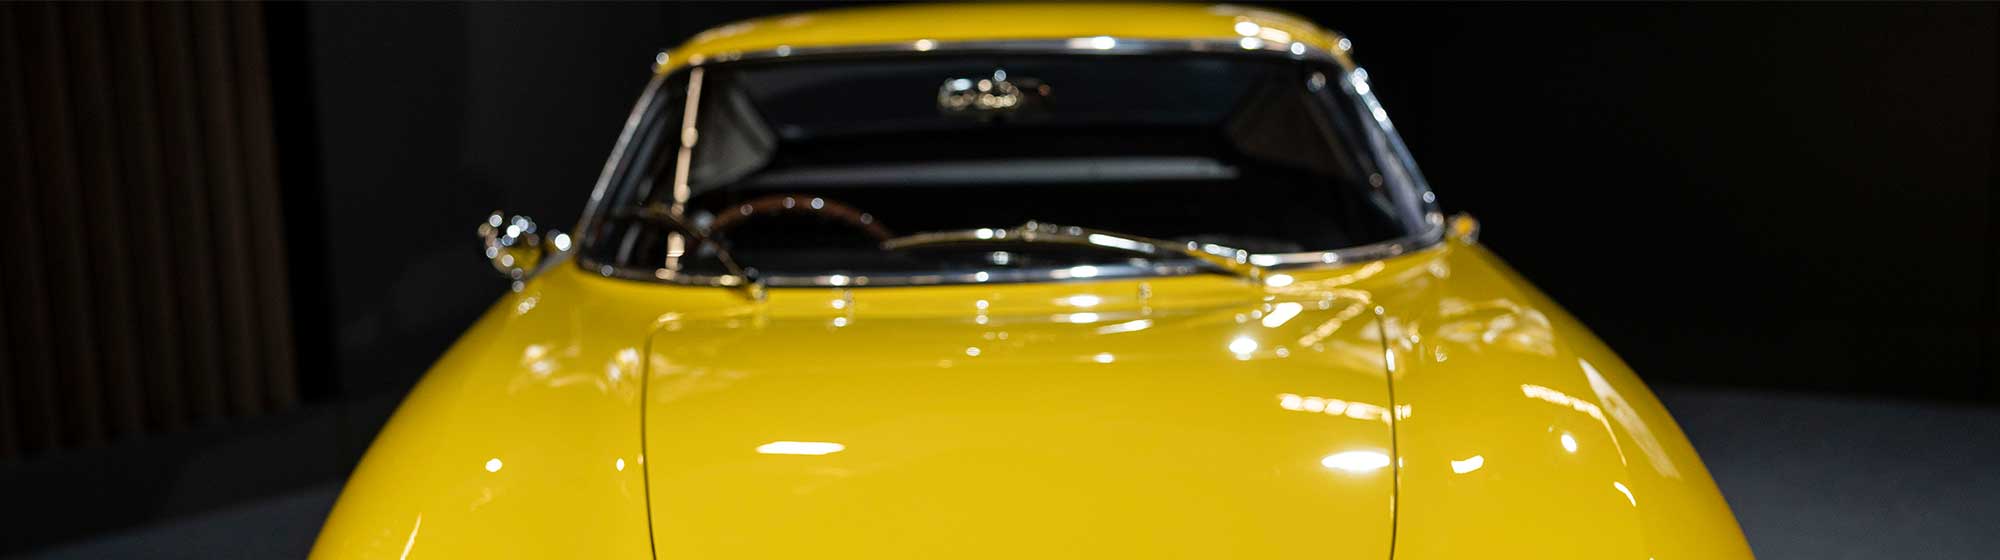 Photo of a yellow vintage Ferrari on display at Retromobile